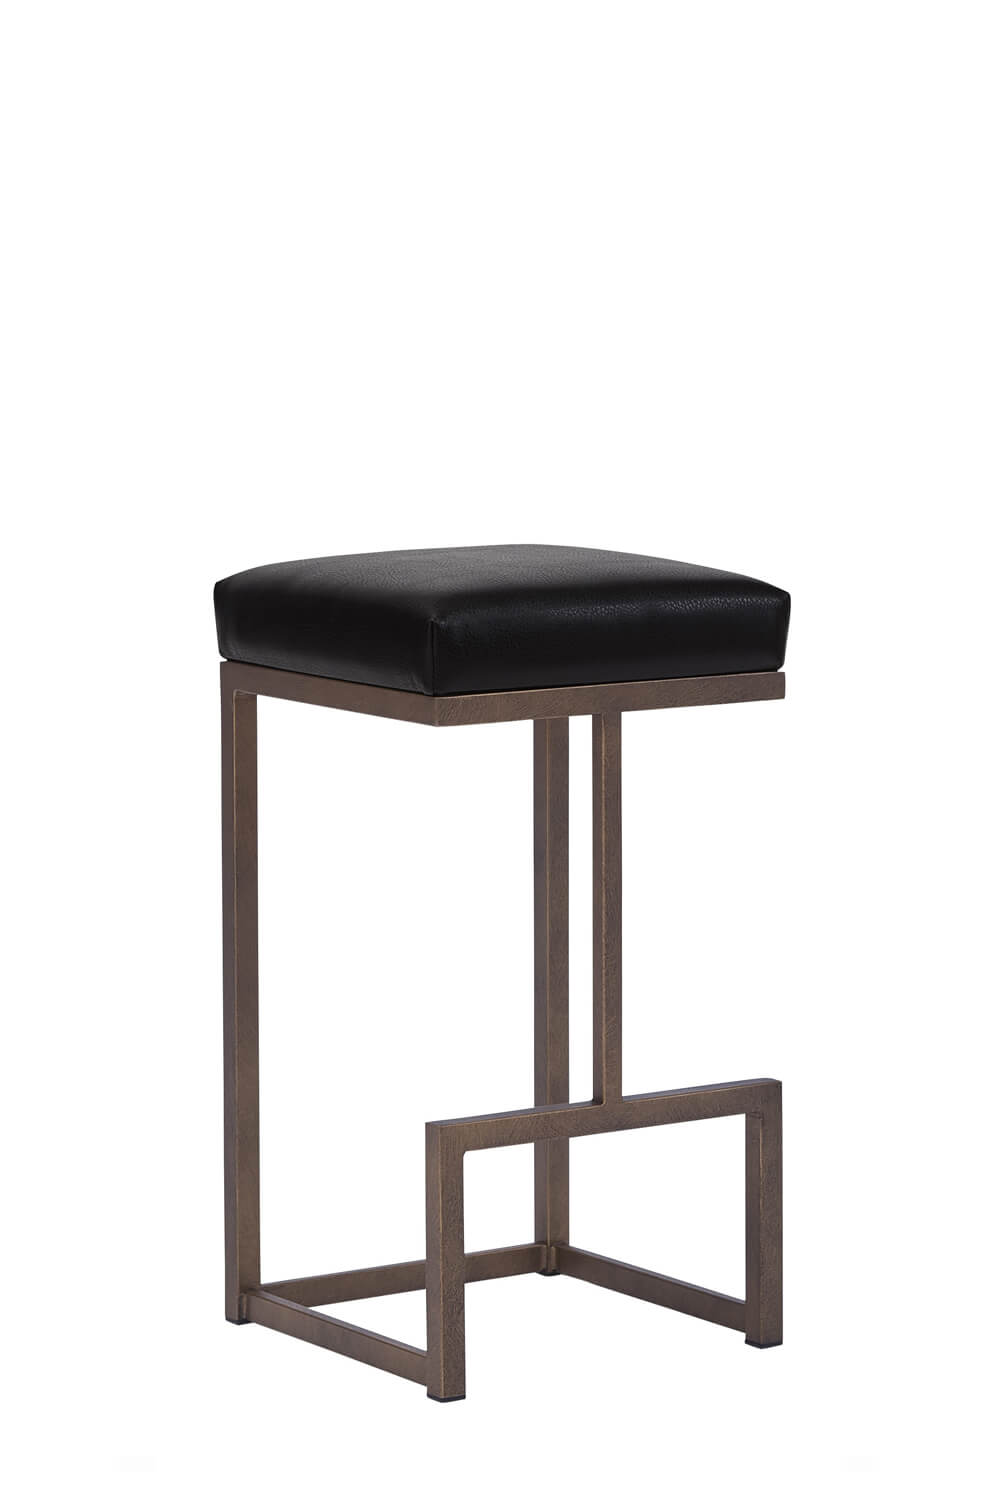 https://barstoolcomforts.com/wp-content/uploads/2016/09/wesley-allen-hugo-modern-backless-bar-stool-square-seat-sled-base-in-espresso-brown.jpg